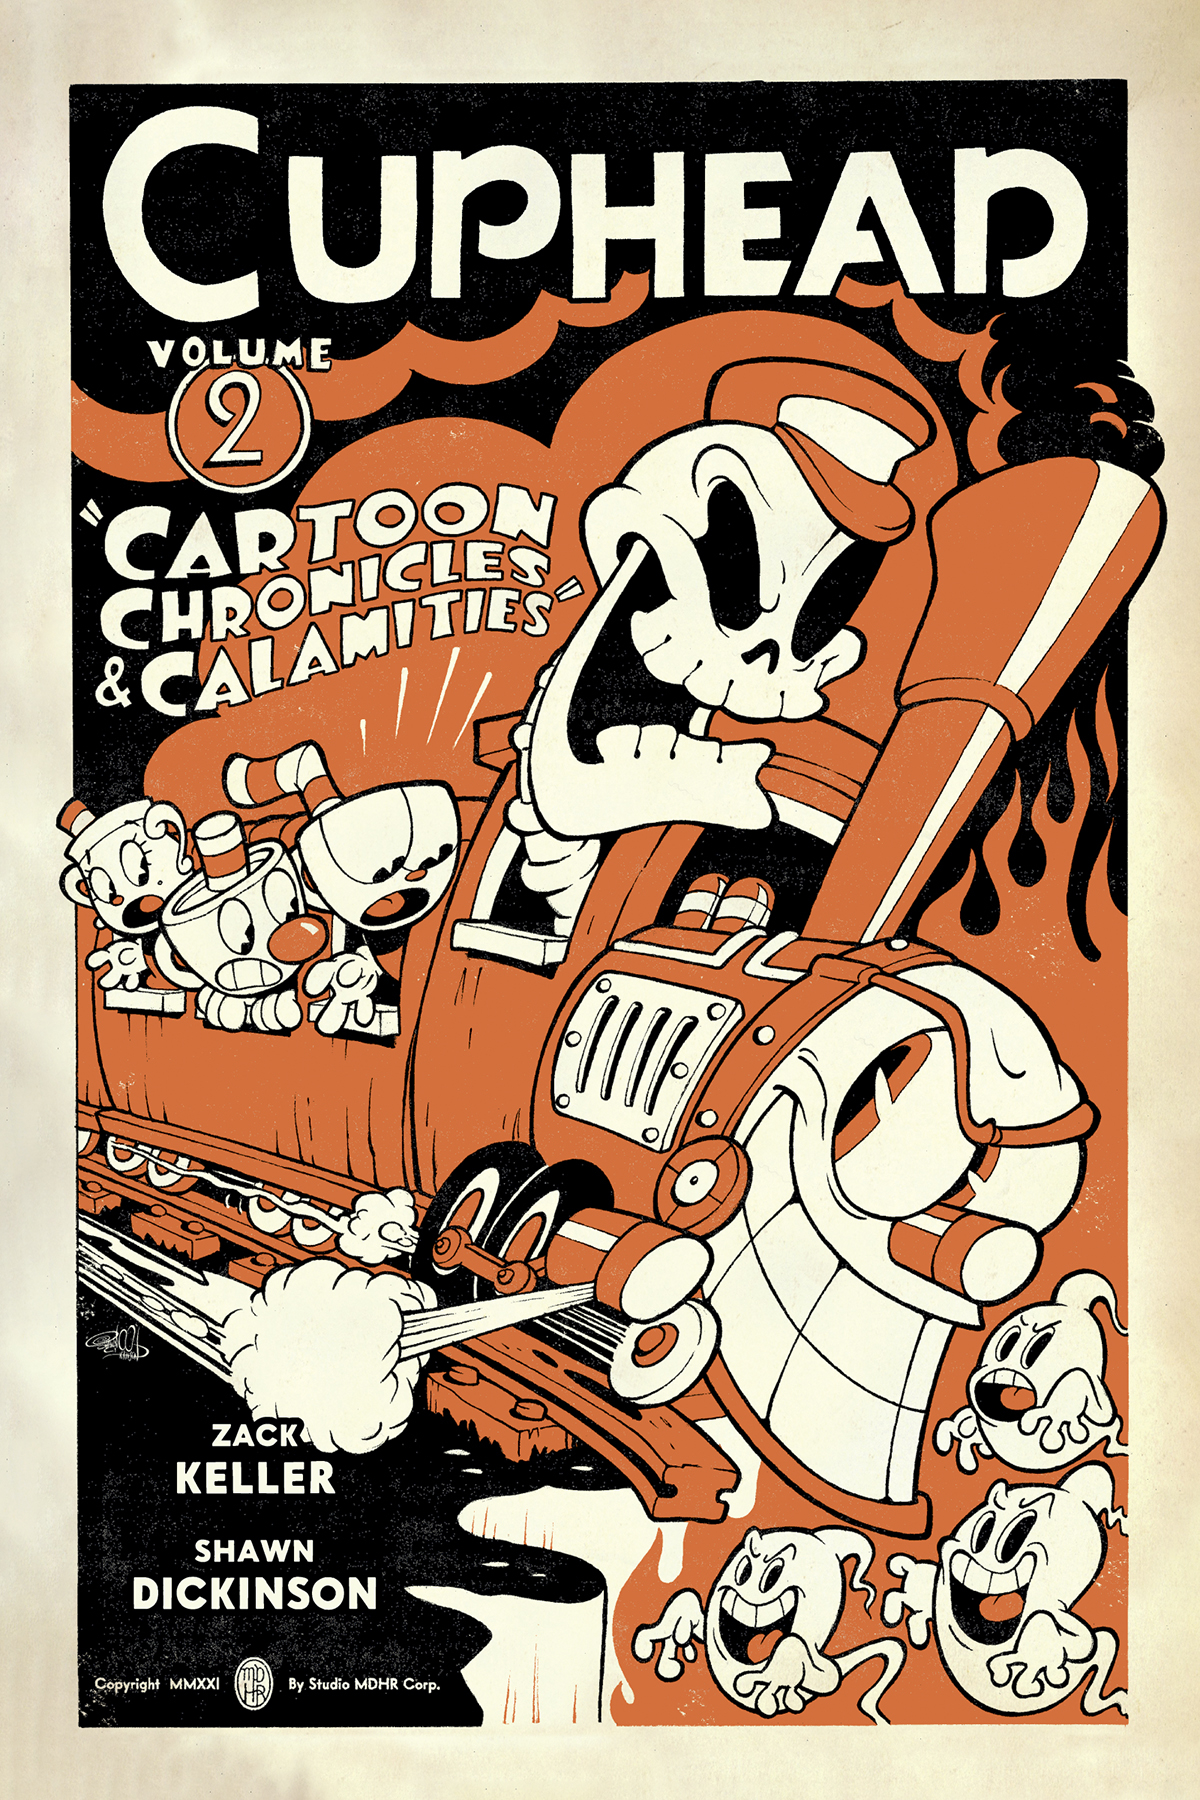 Cuphead Graphic Novel Volume 2 Cartoon Chronicles & Calamities